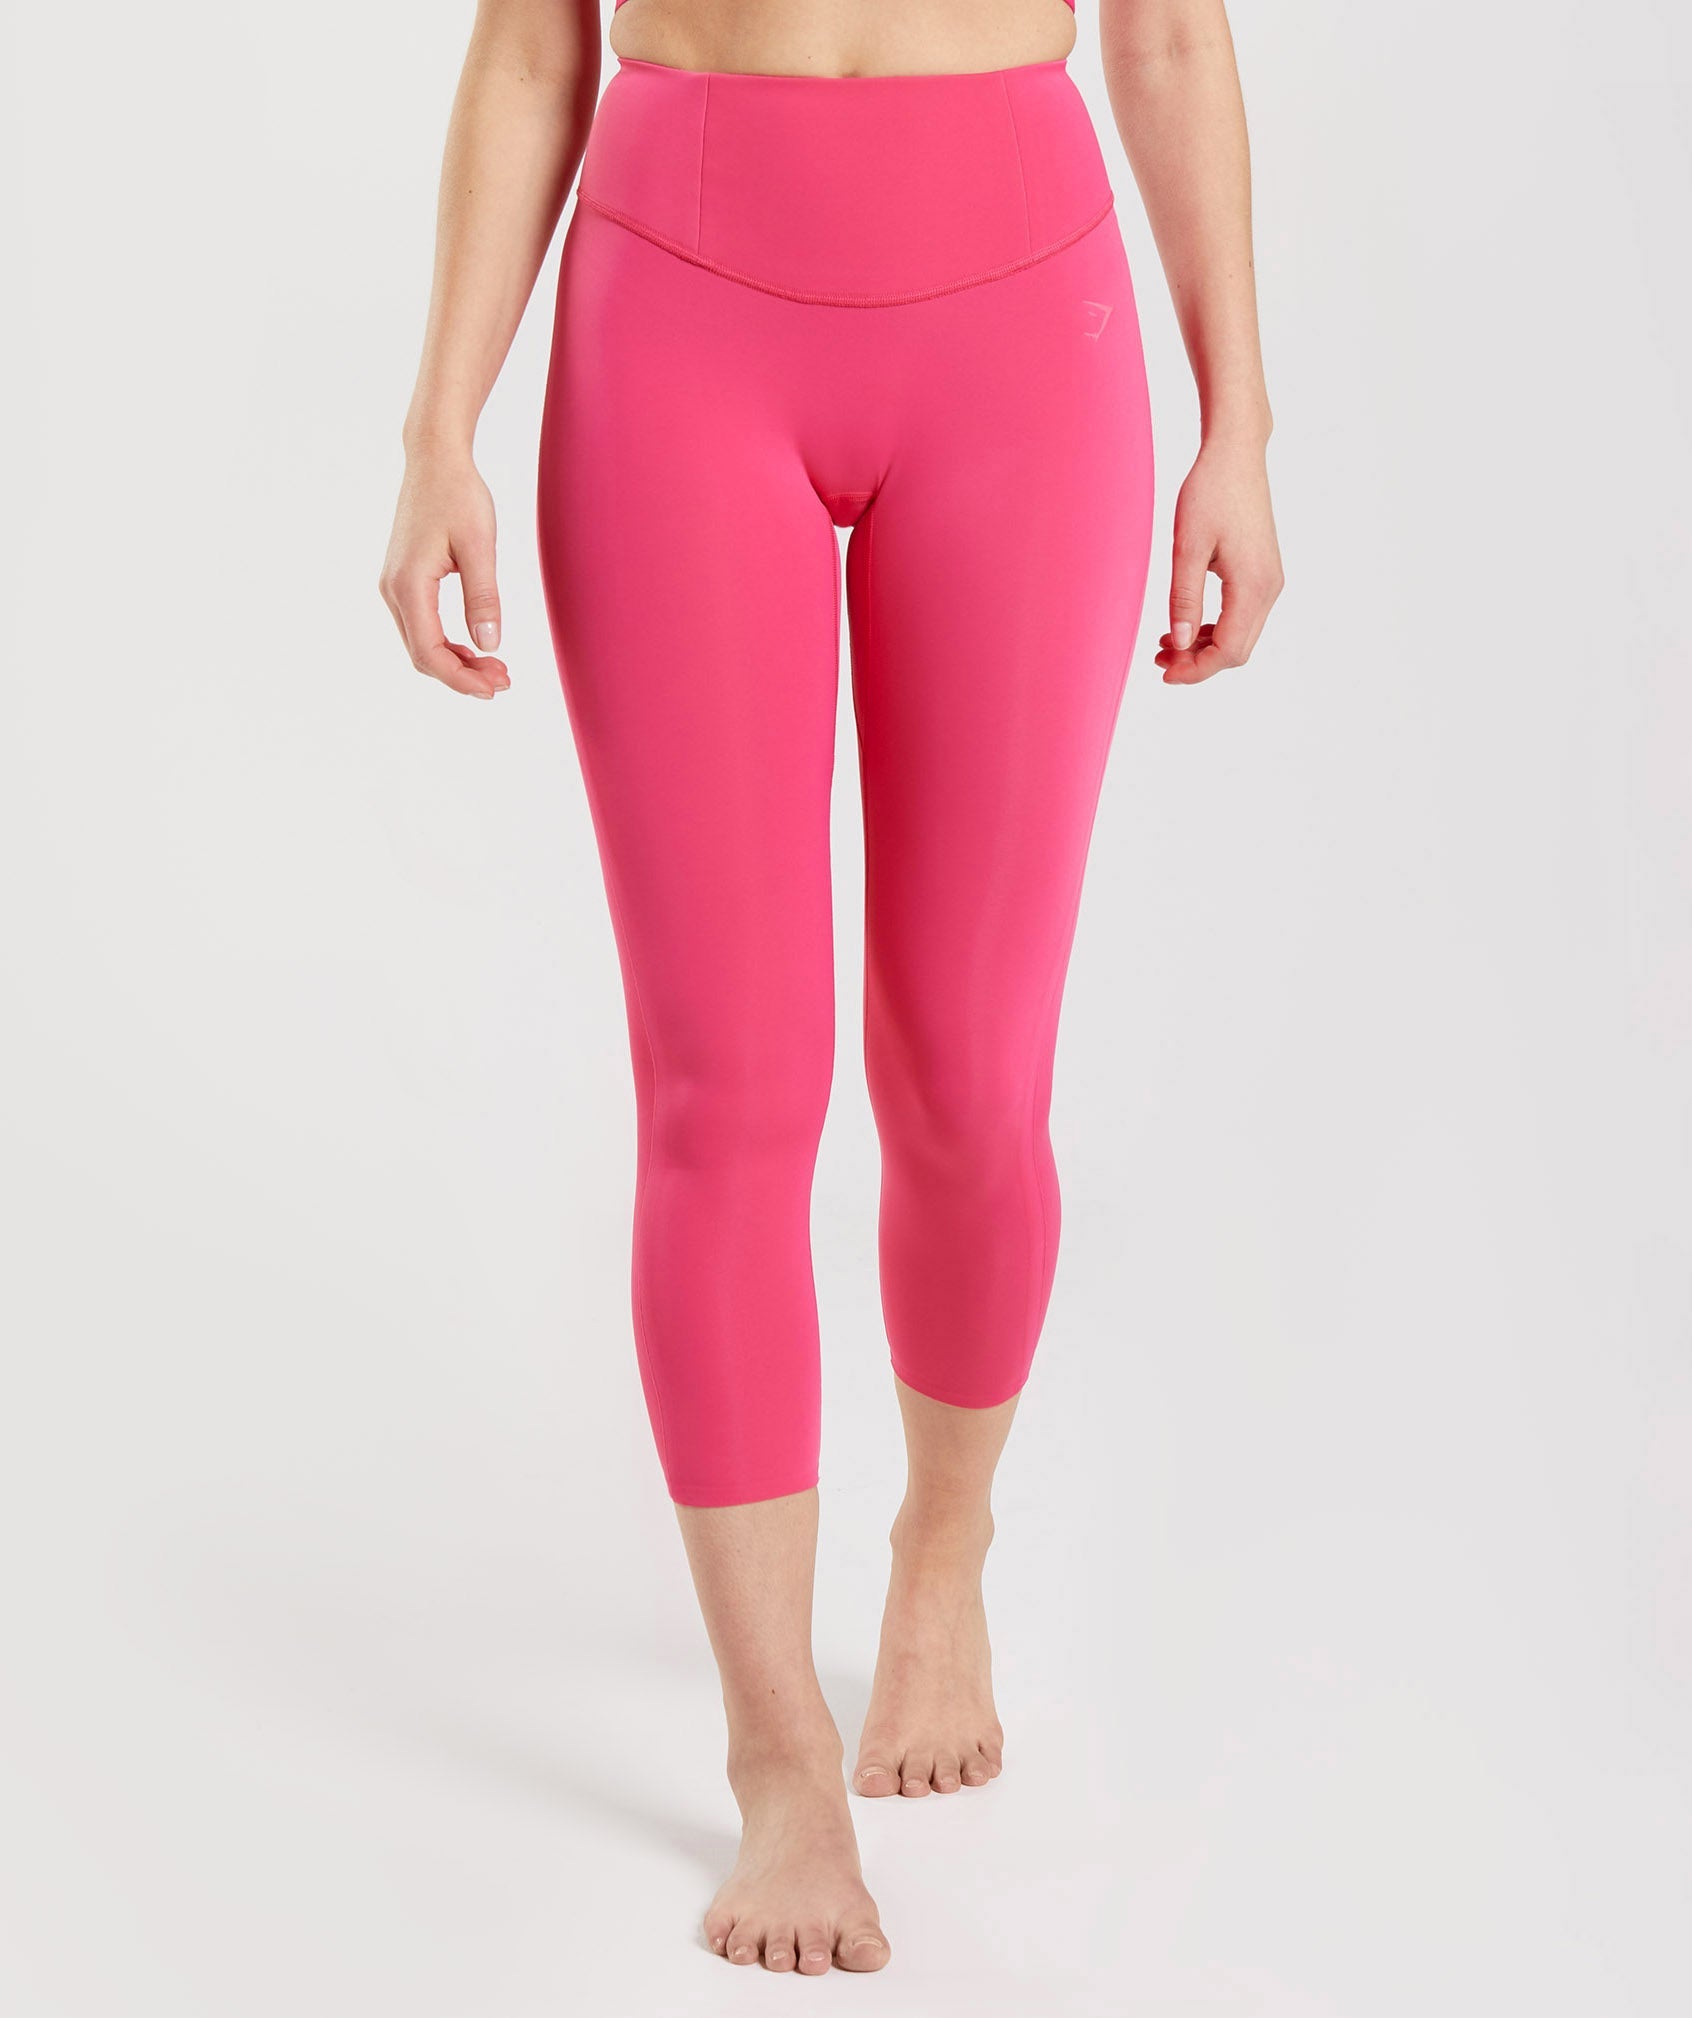 Neon Pink Everyday Legging - 7/8 length - XL / 7/8  Active wear leggings,  Everyday leggings, Neon pink